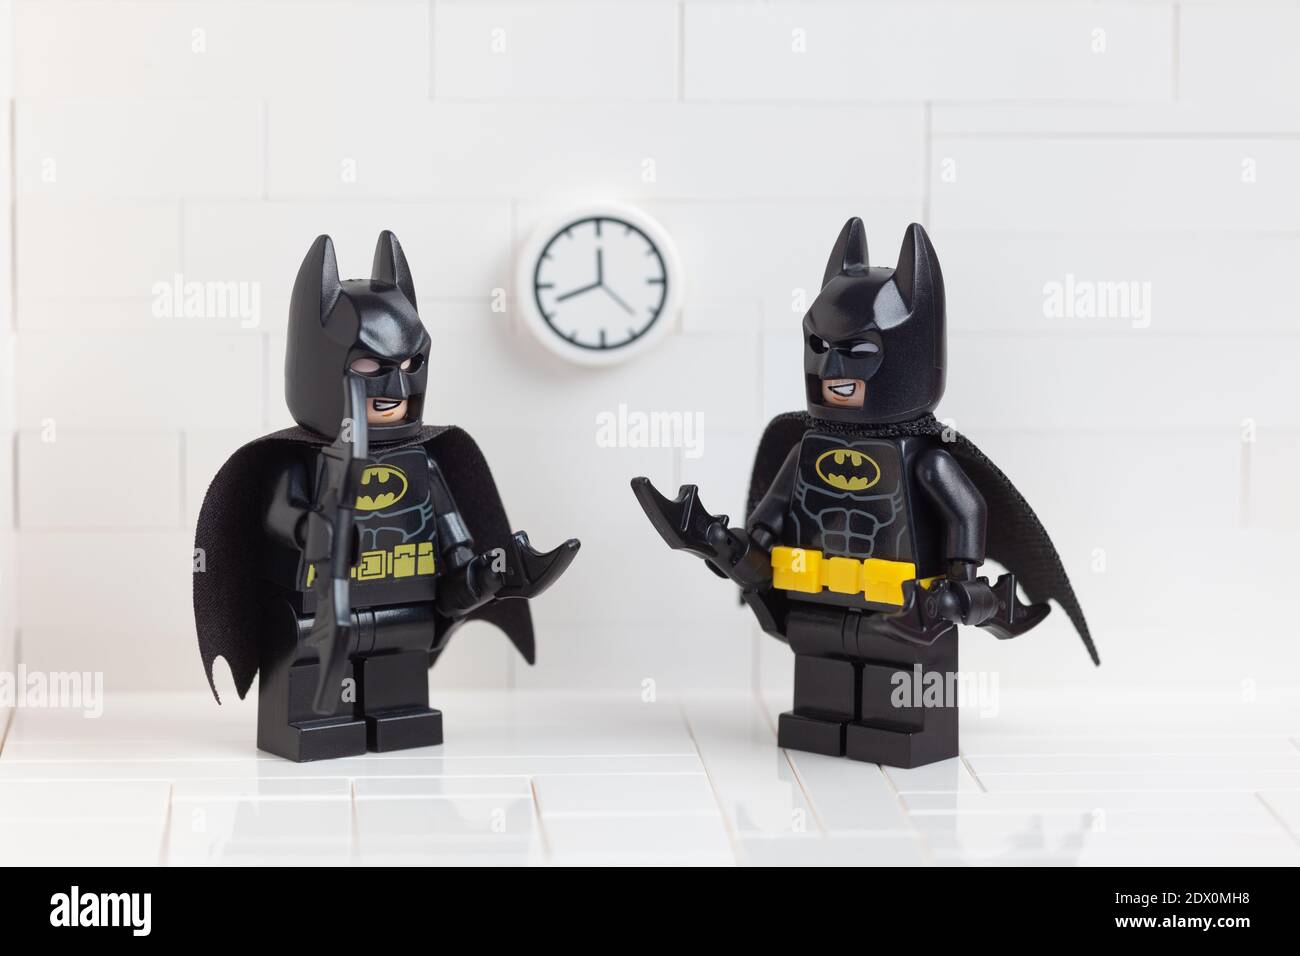 Batman minifigures hi-res stock photography and images - Alamy